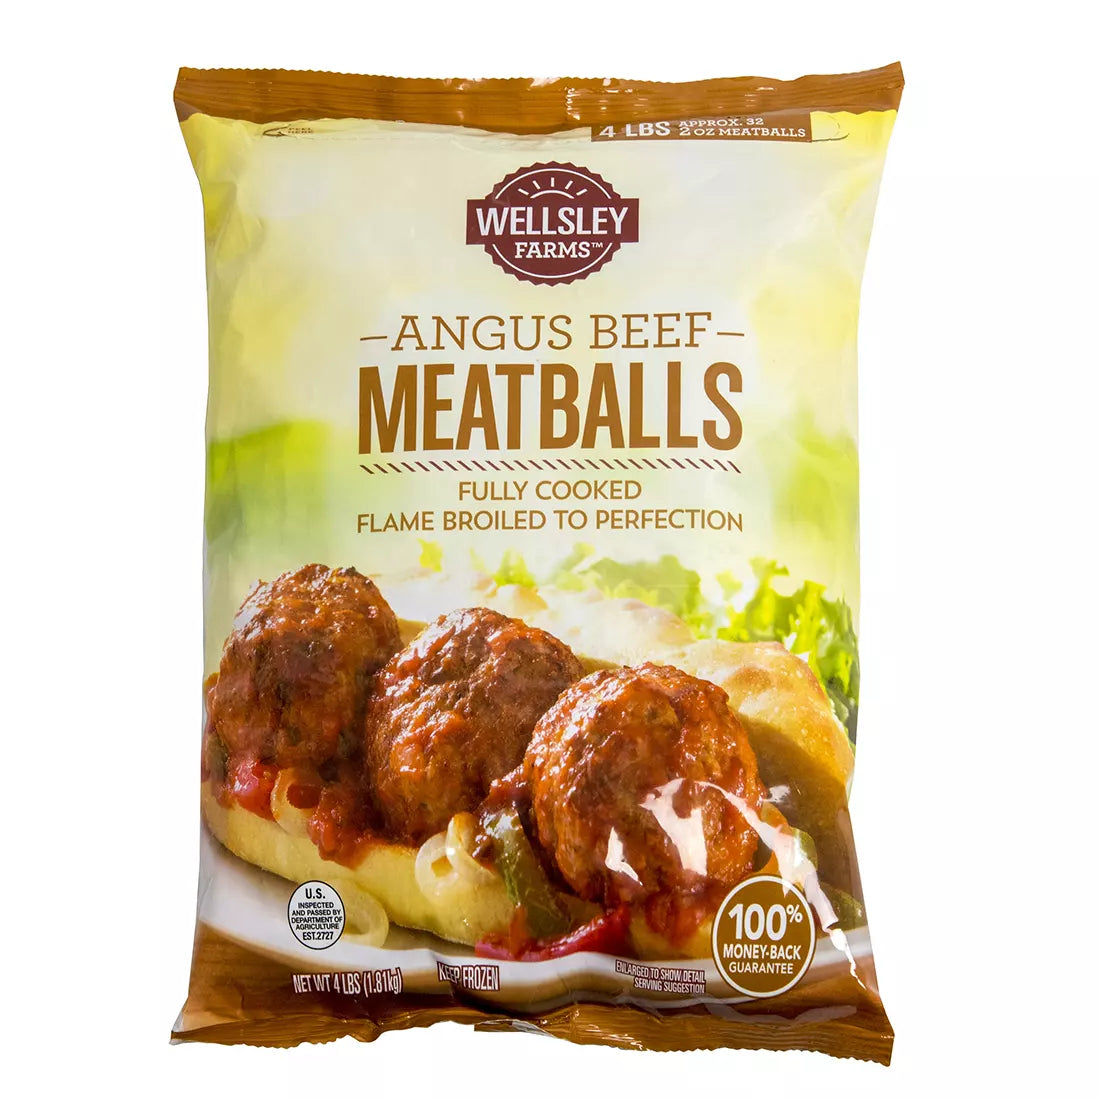 Wellsley Farms Angus Beef Meatballs, 4 lbs.